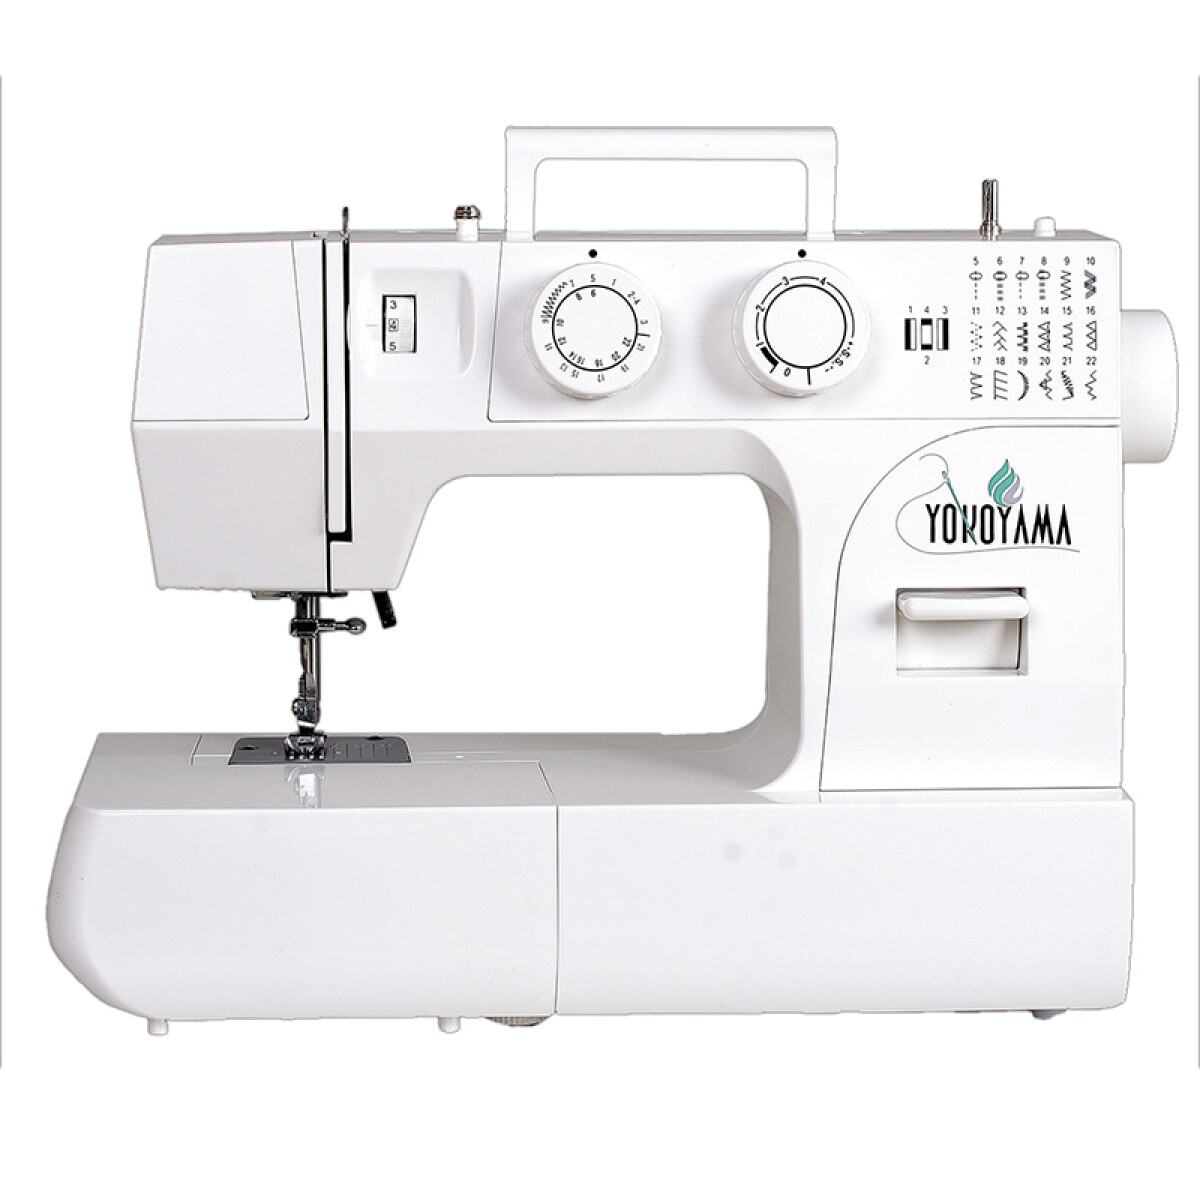 Máquina de coser Yokoyama KP-8855 